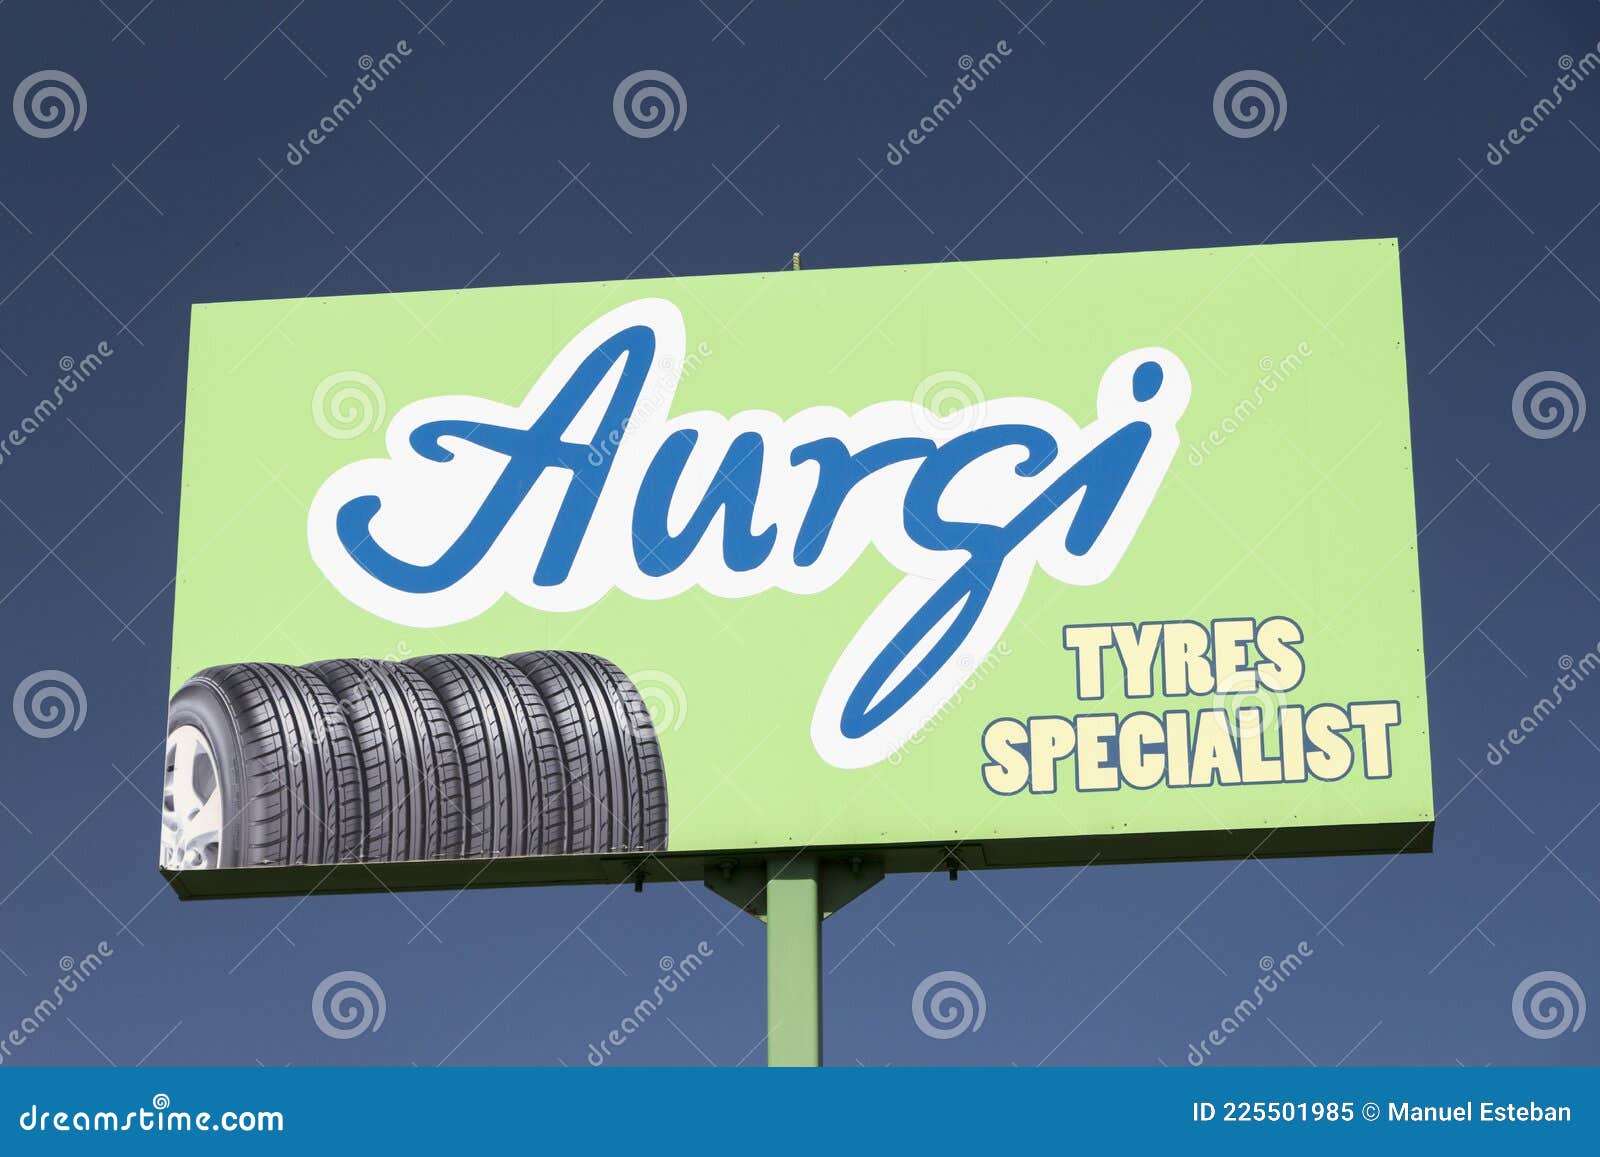 Radios - Aurgi